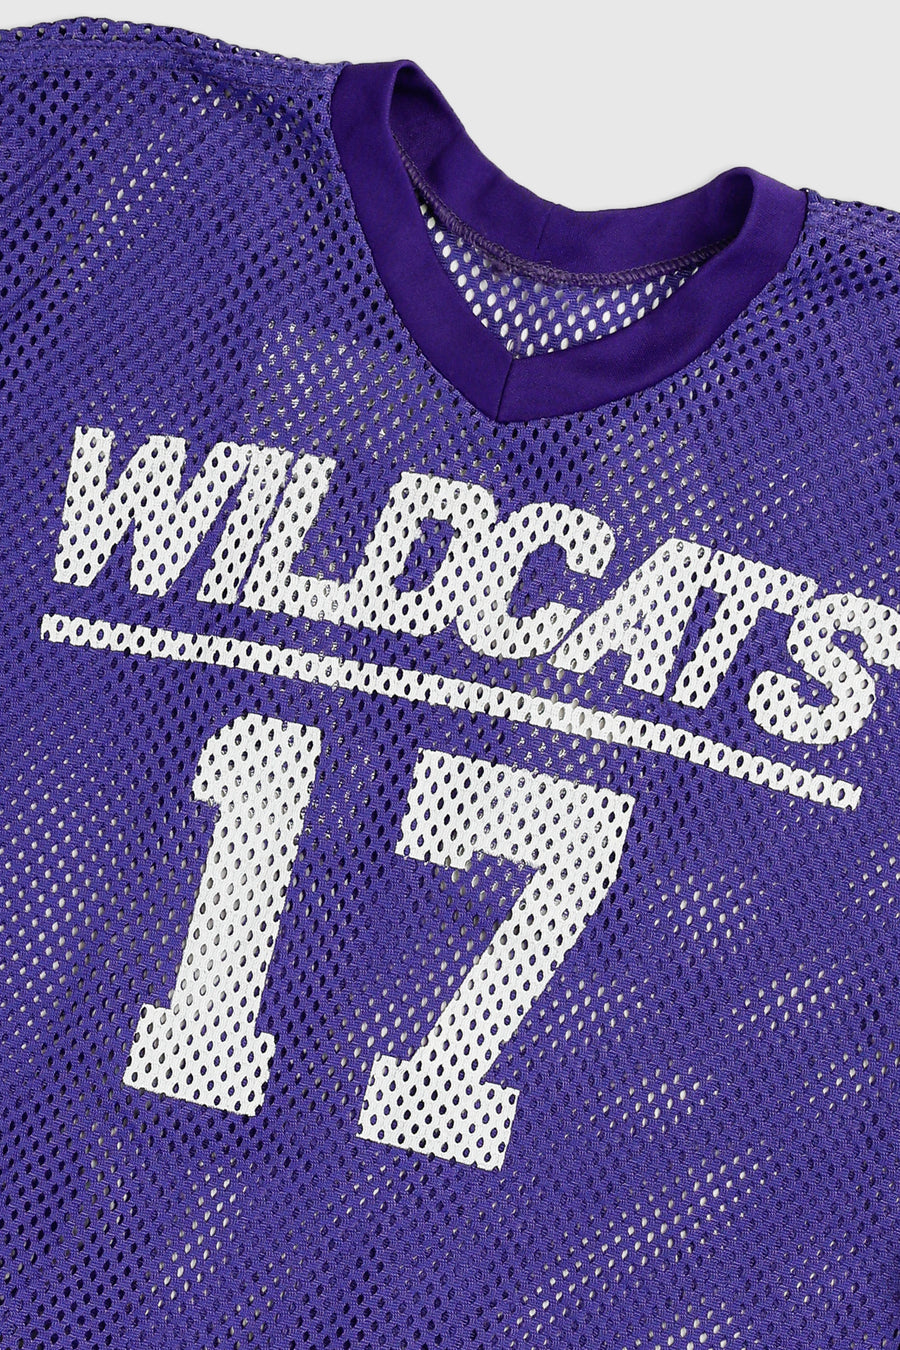 Vintage Wildcats Football Jersey - L